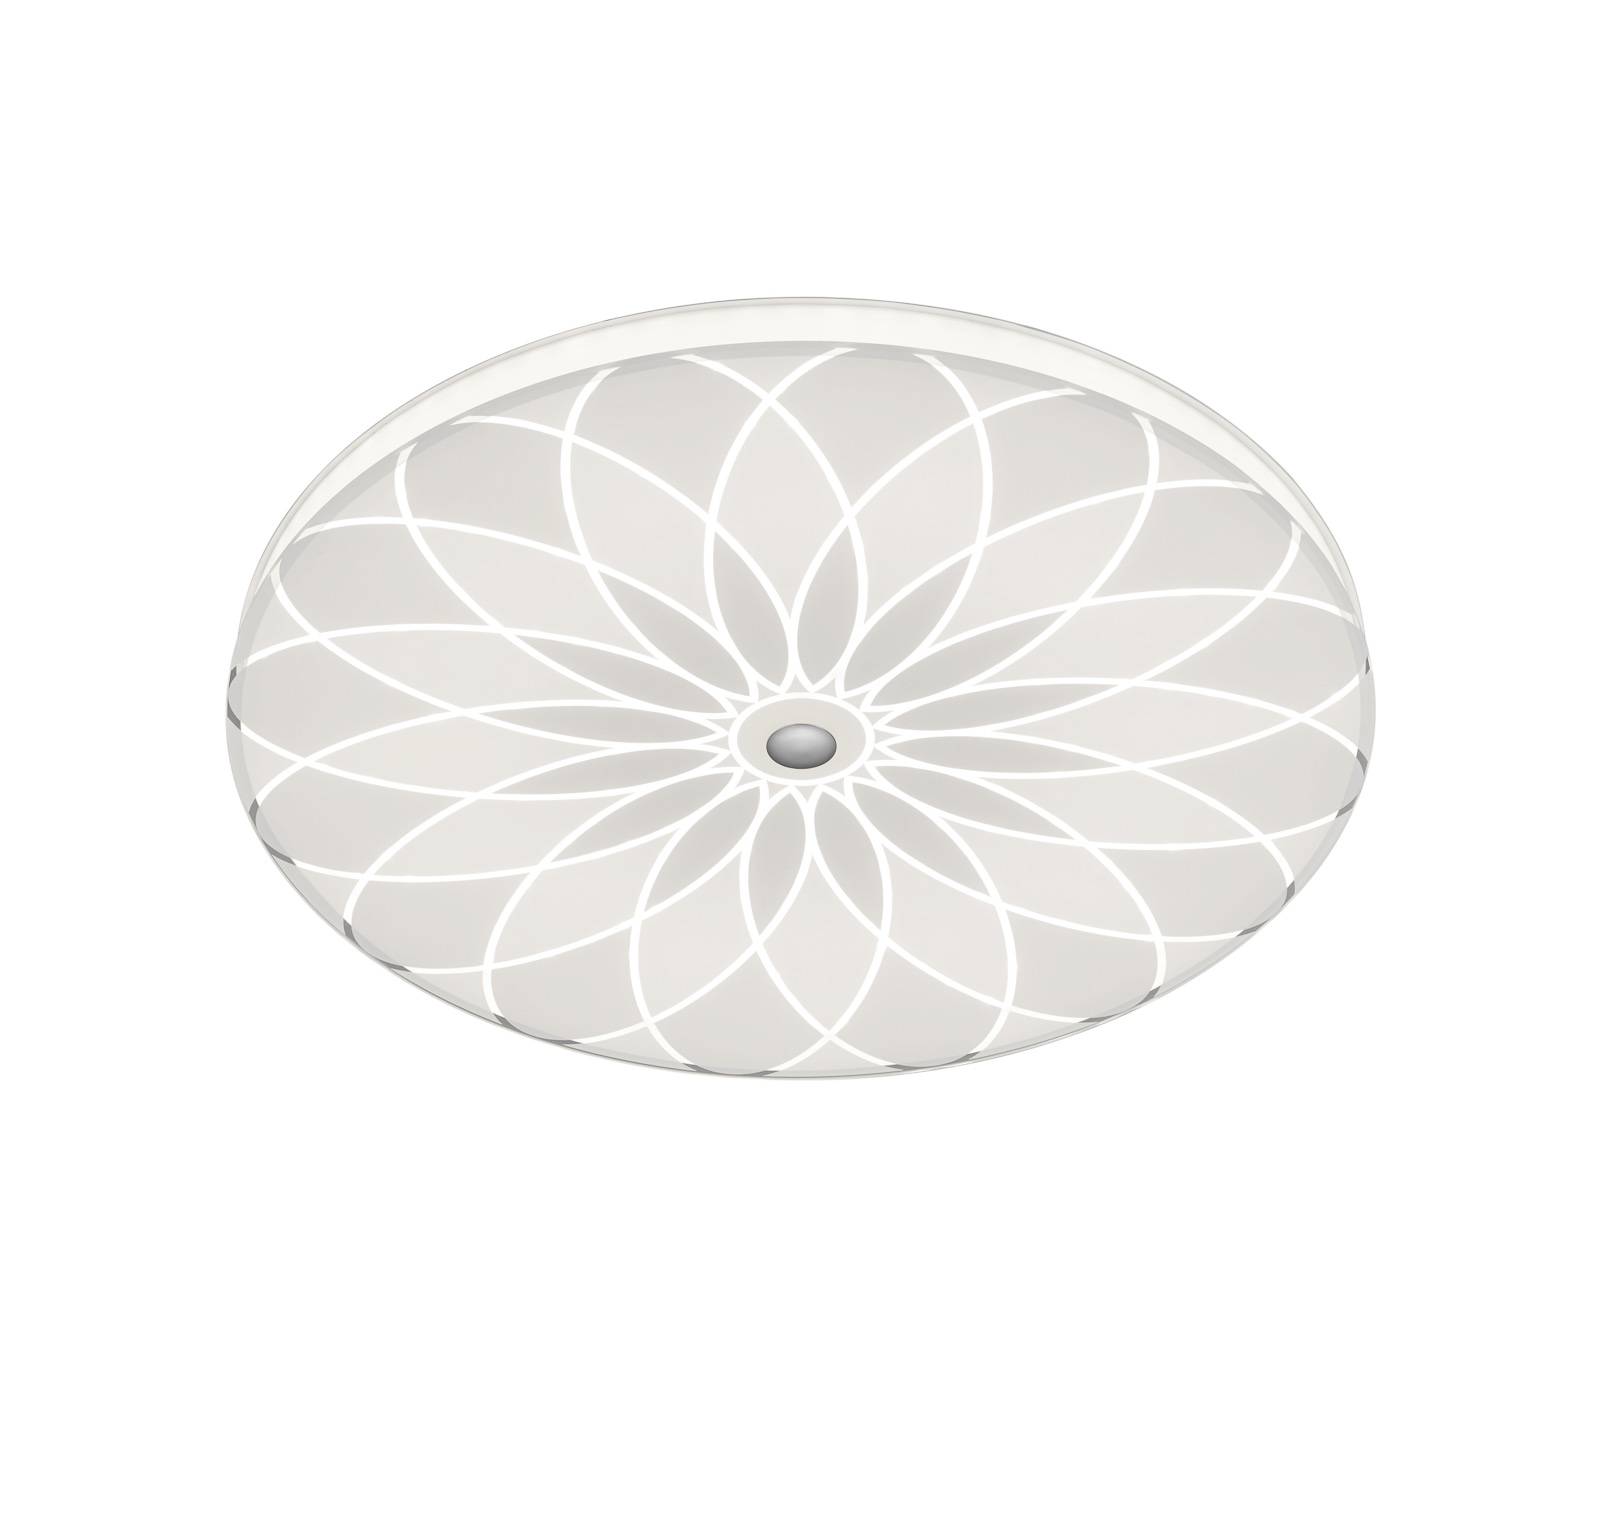 BANKAMP Mandala LED-Deckenleuchte Blume, Ø 52 cm